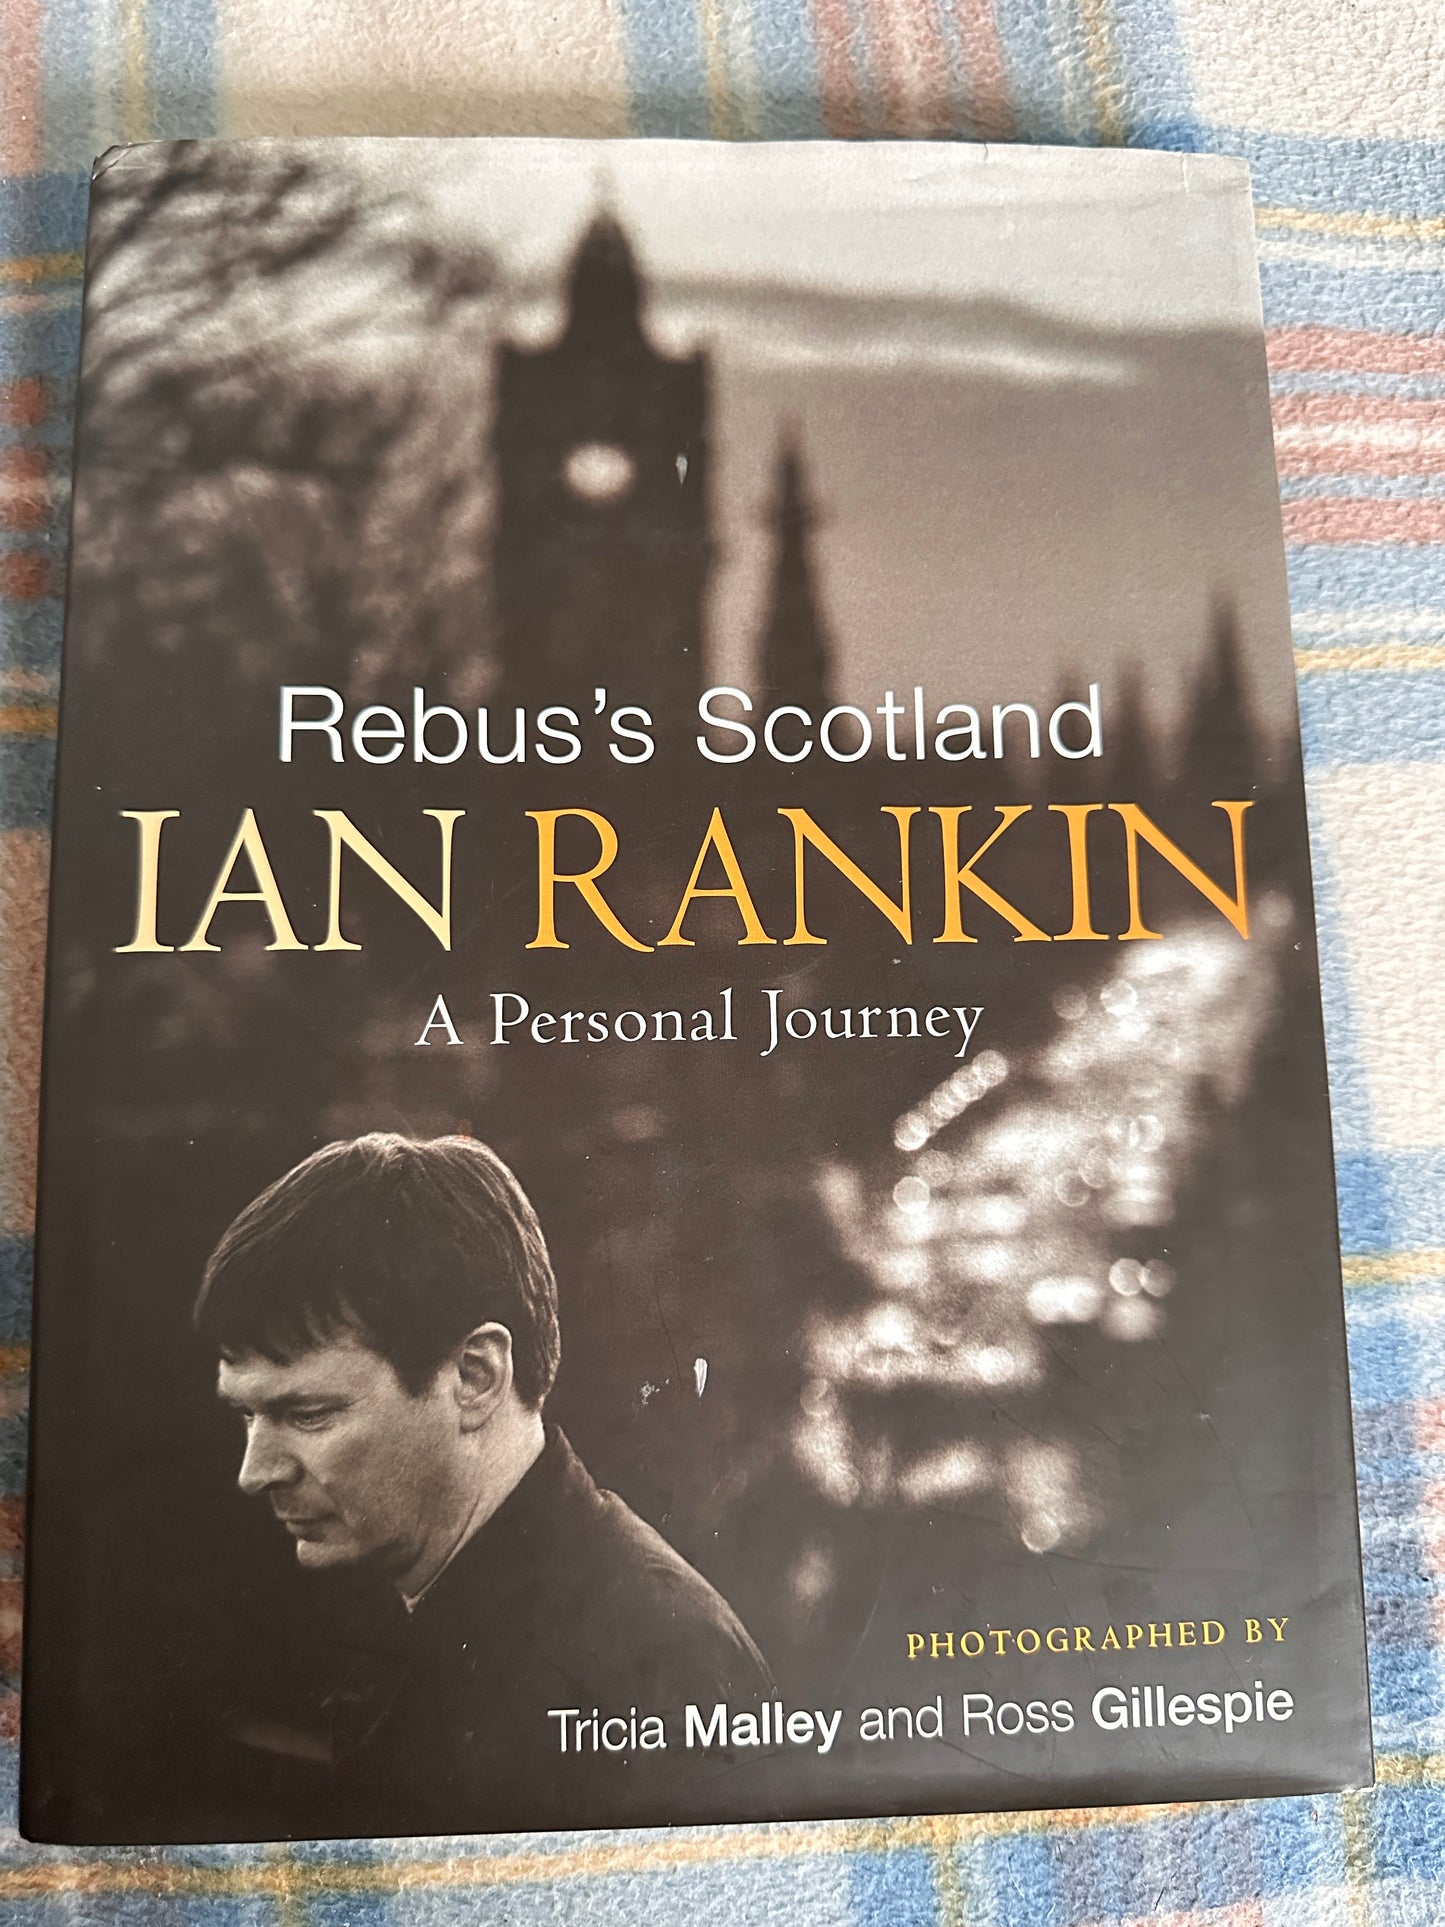 2005*1st*Rebus’s Scotland A Personal Journey - Ian Rankin(Orion)